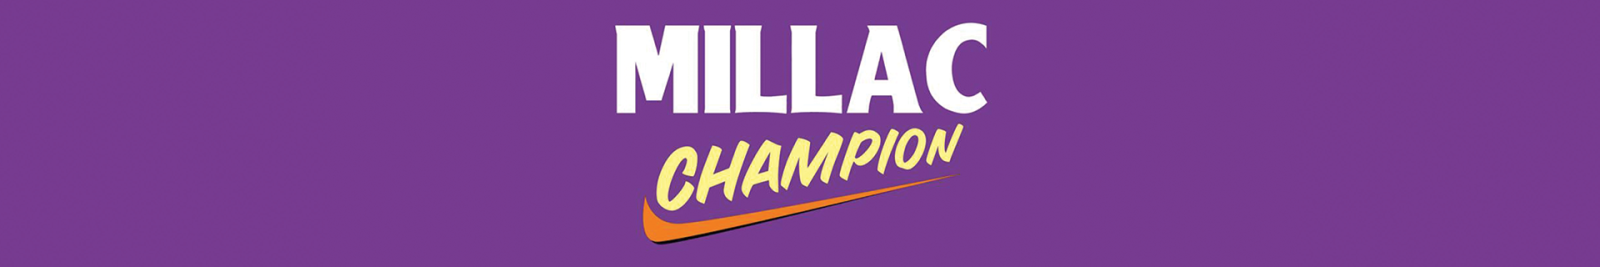 Millac Champion